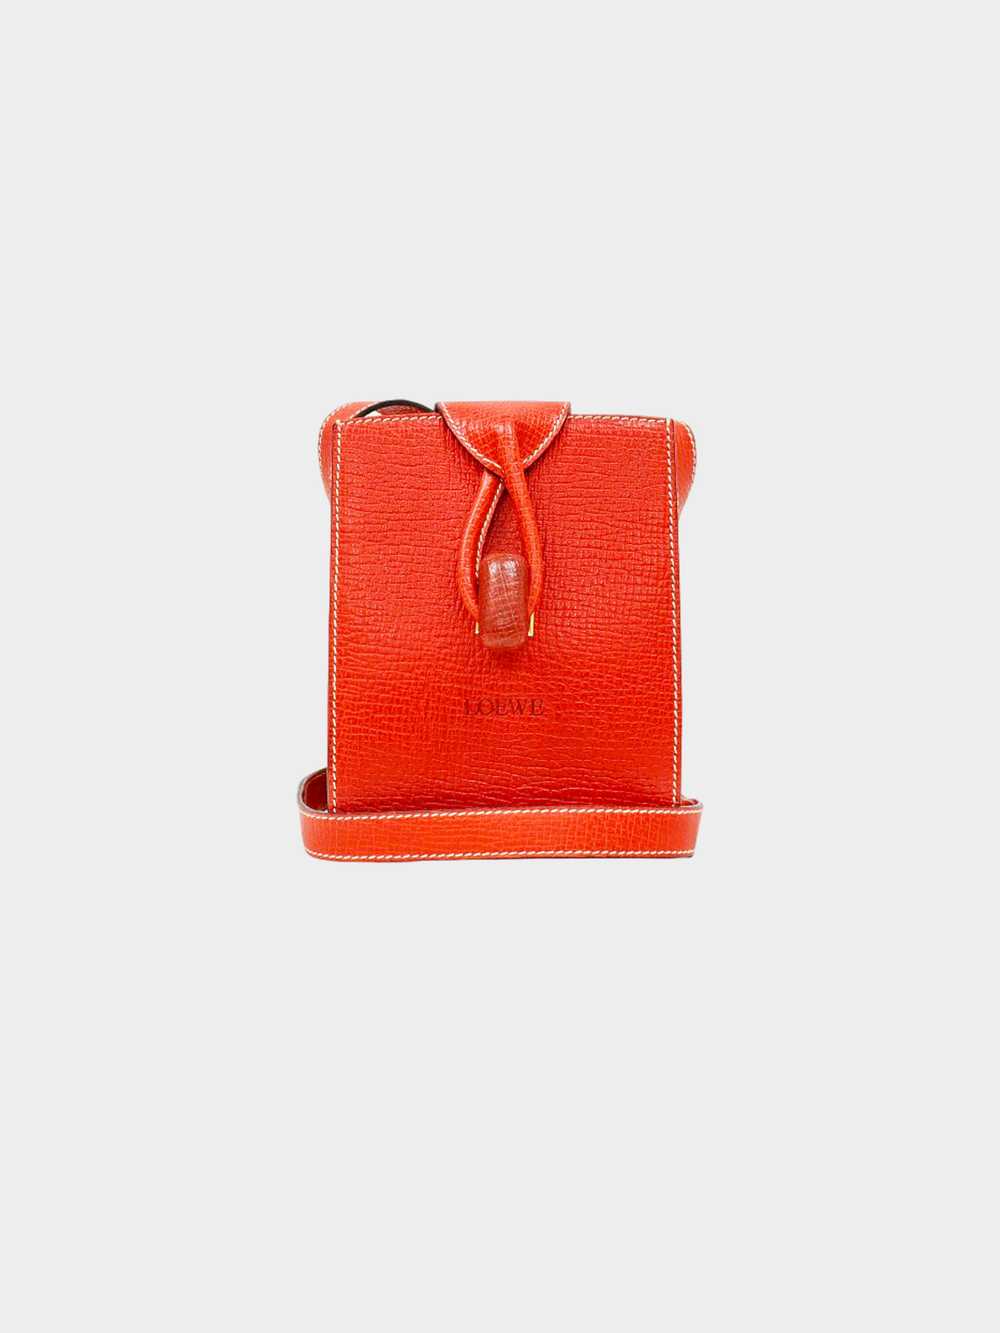 Loewe 2010s Red Mini Toggle Shoulder Bag - image 1